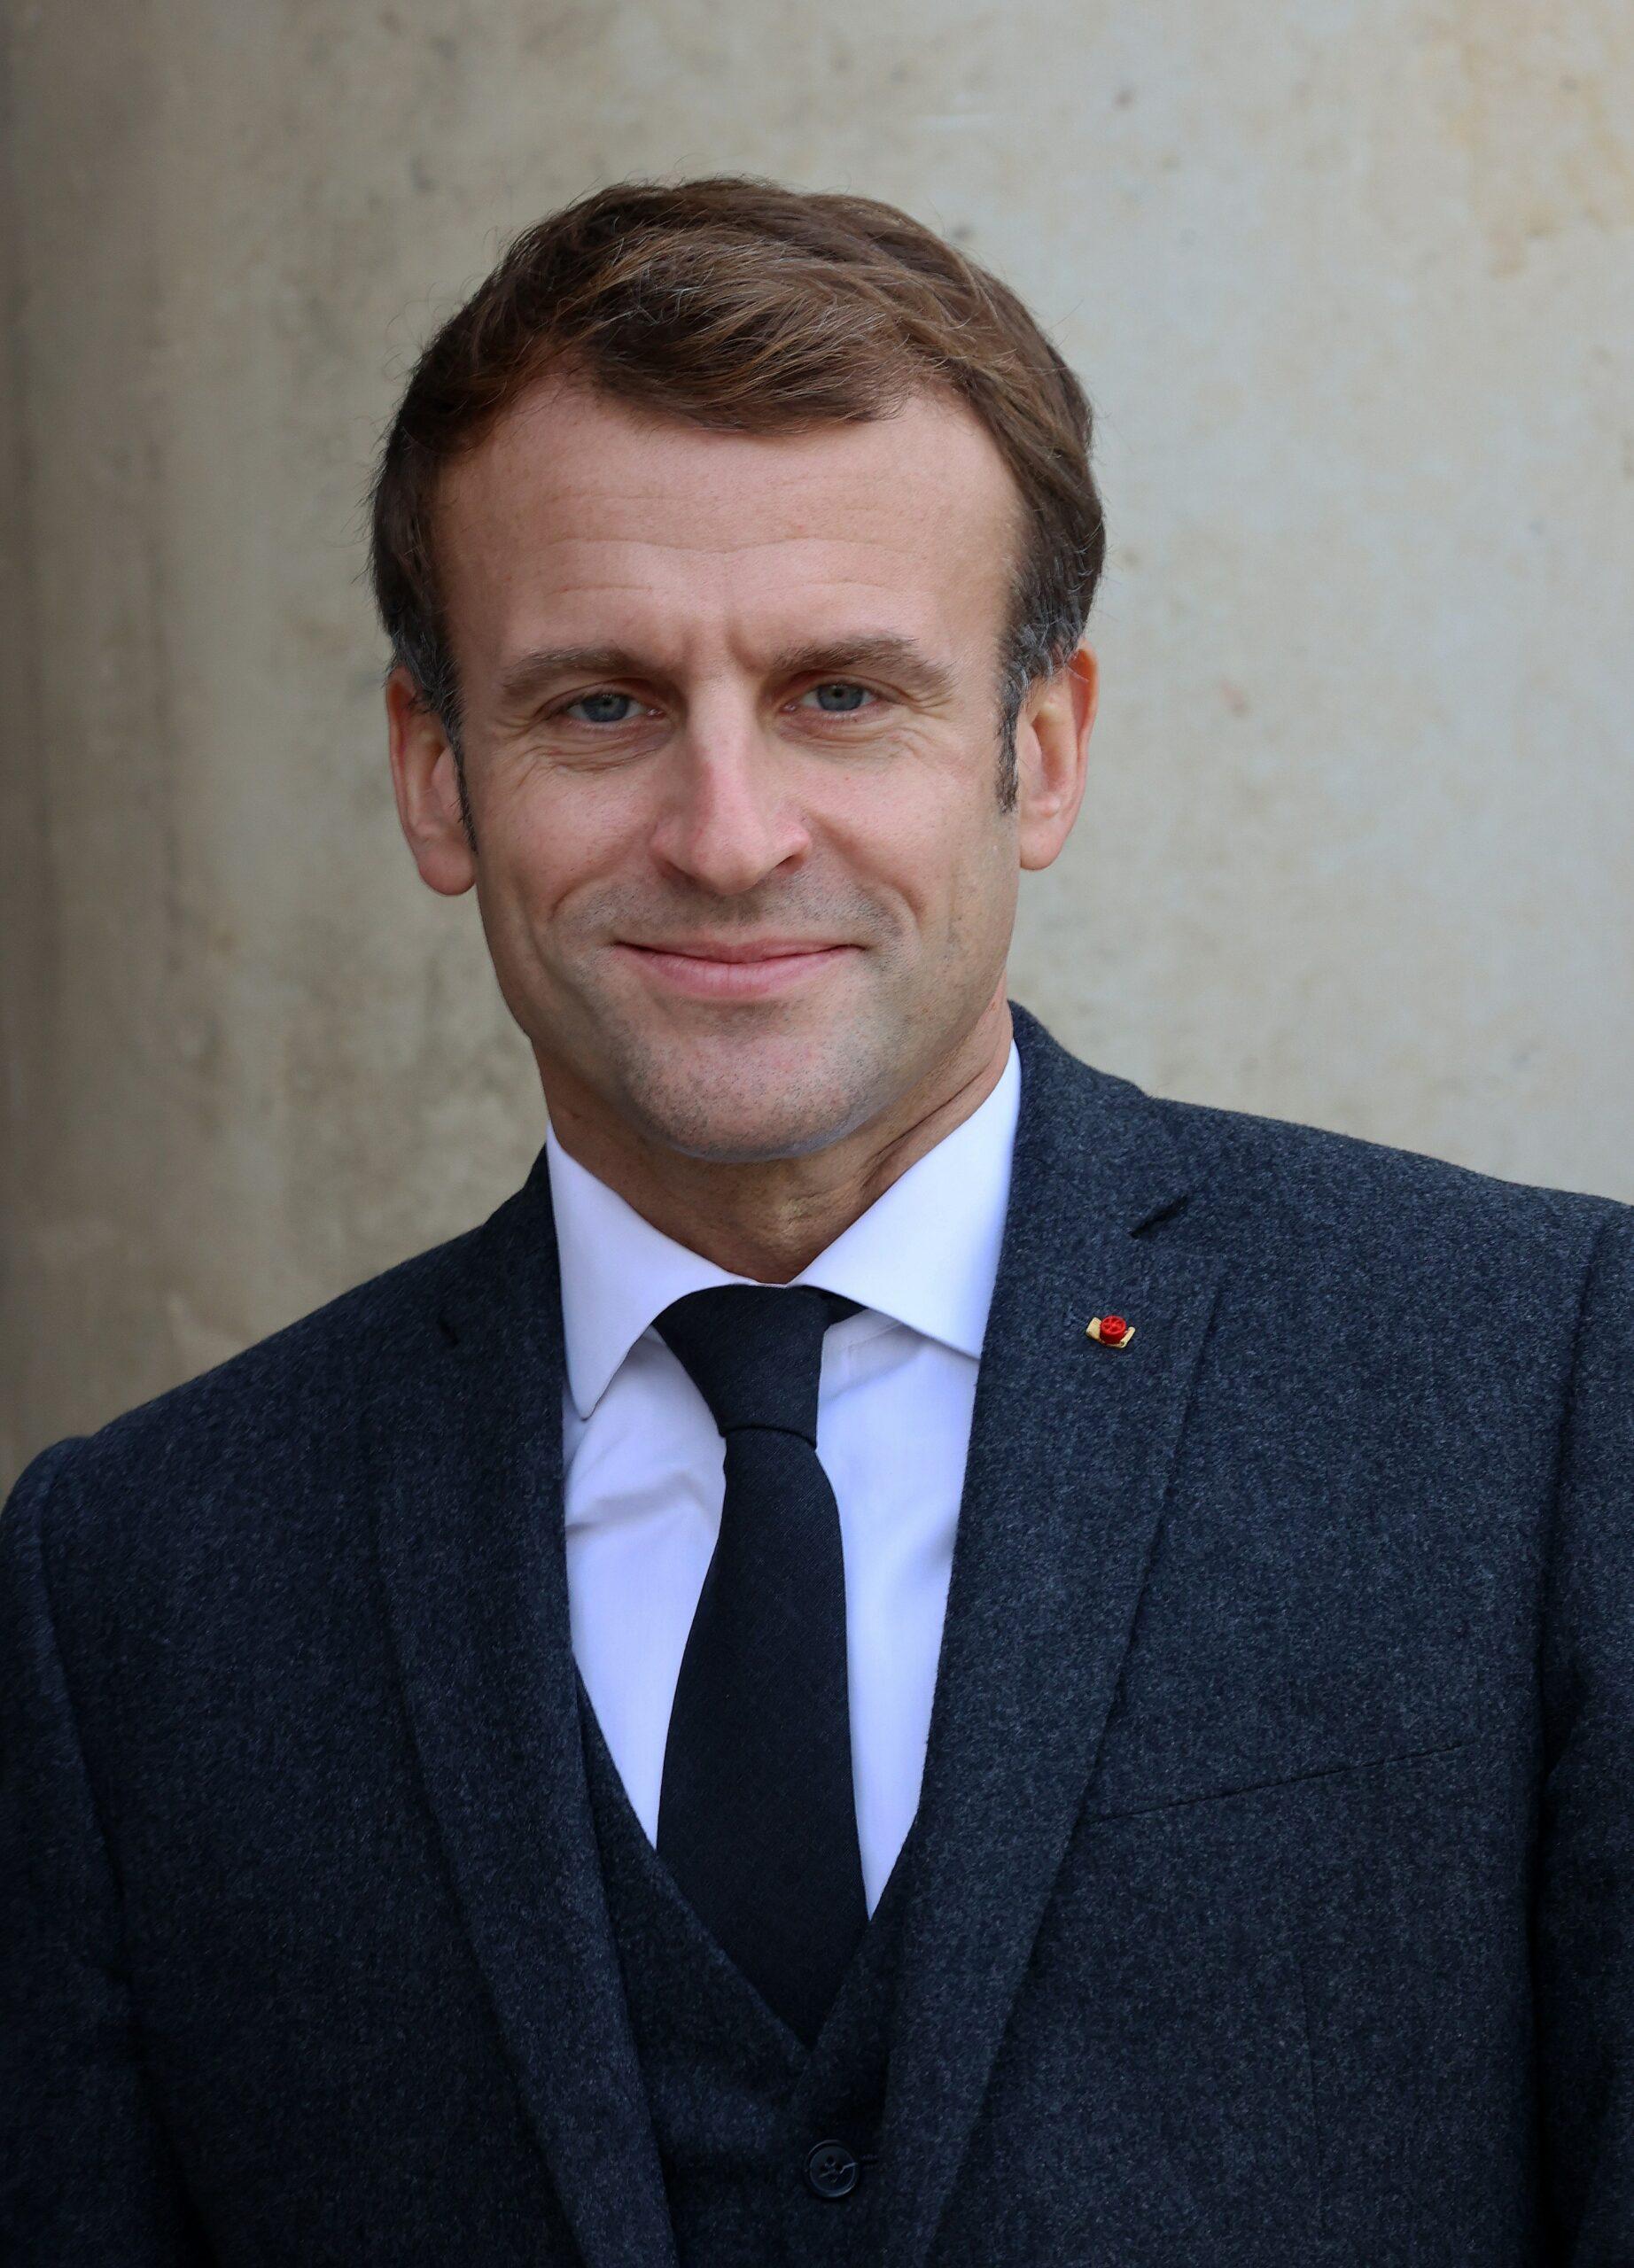 French President Emmanuel Macron at the Elys e Palace